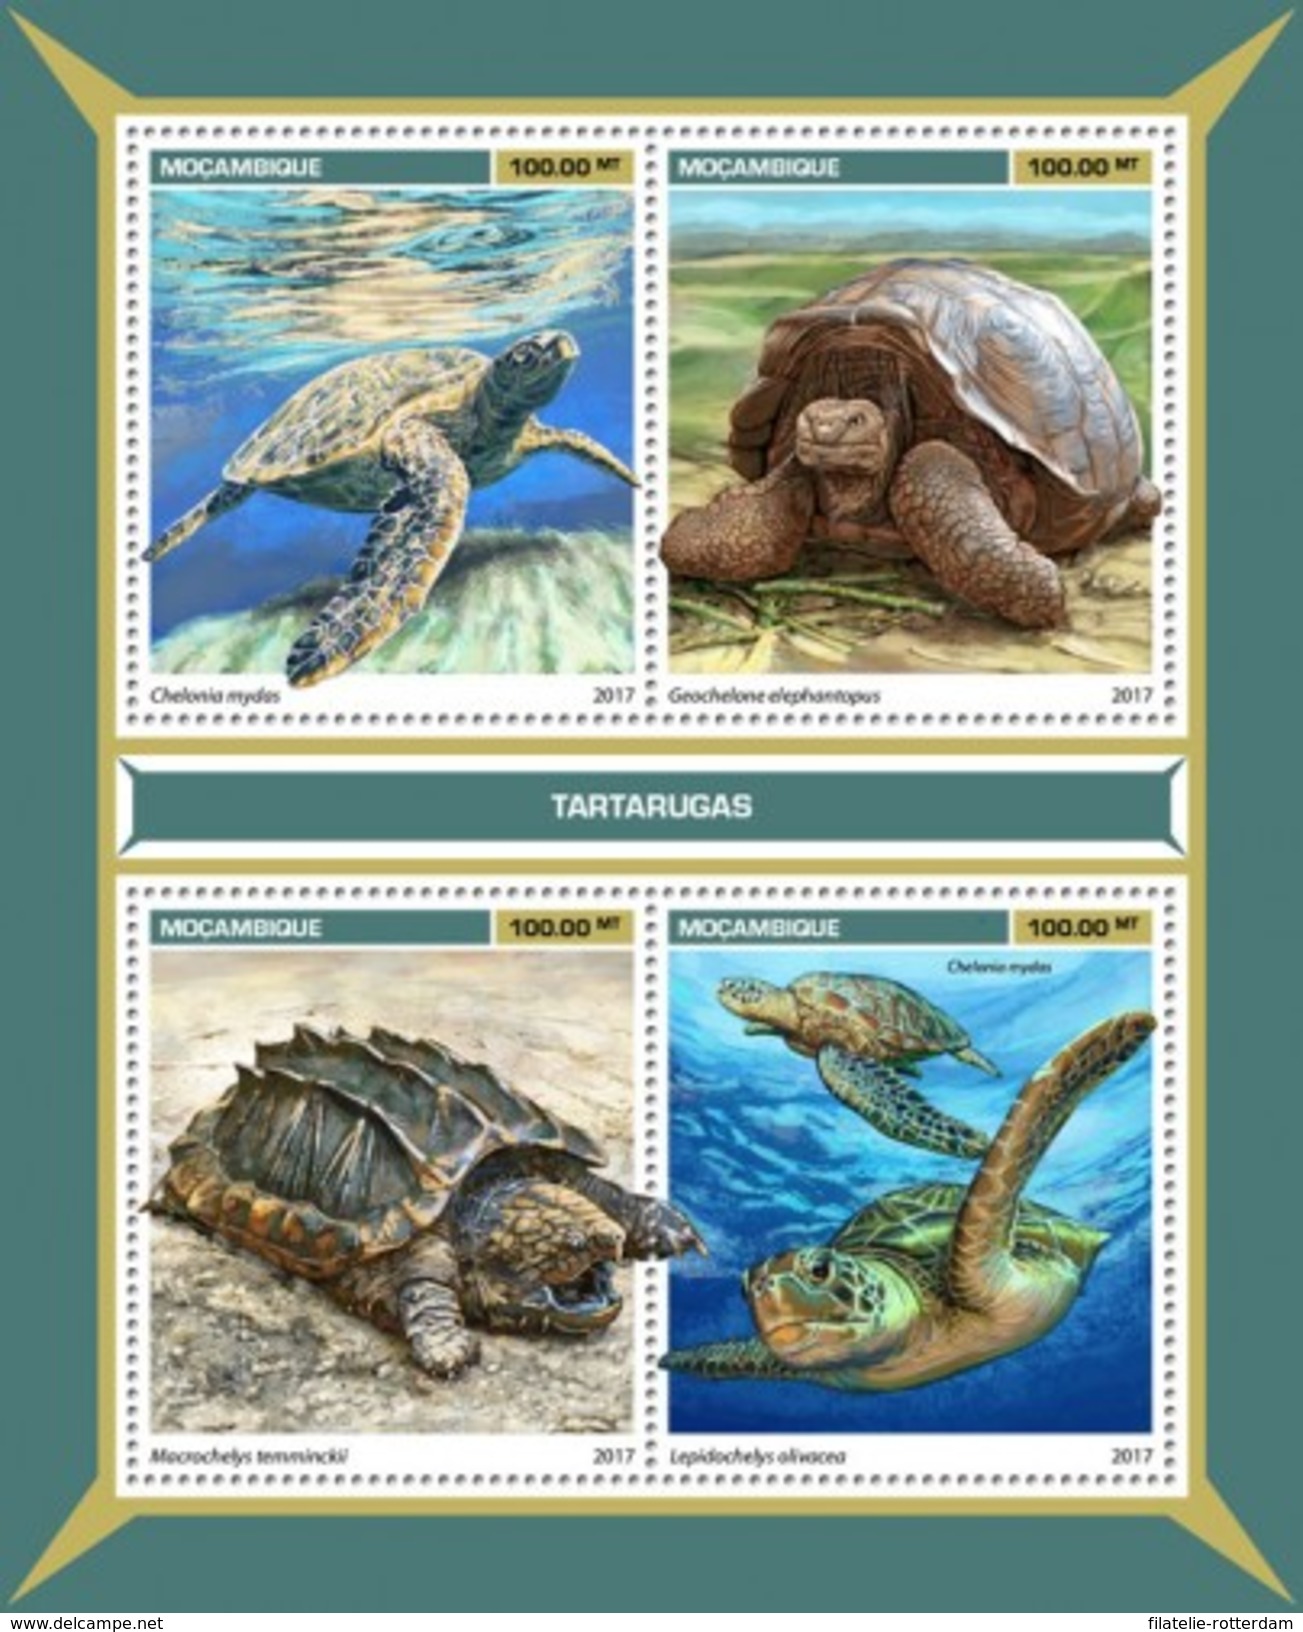 Mozambique - Postfris / MNH - Sheet Schildpadden 2017 - Mozambico